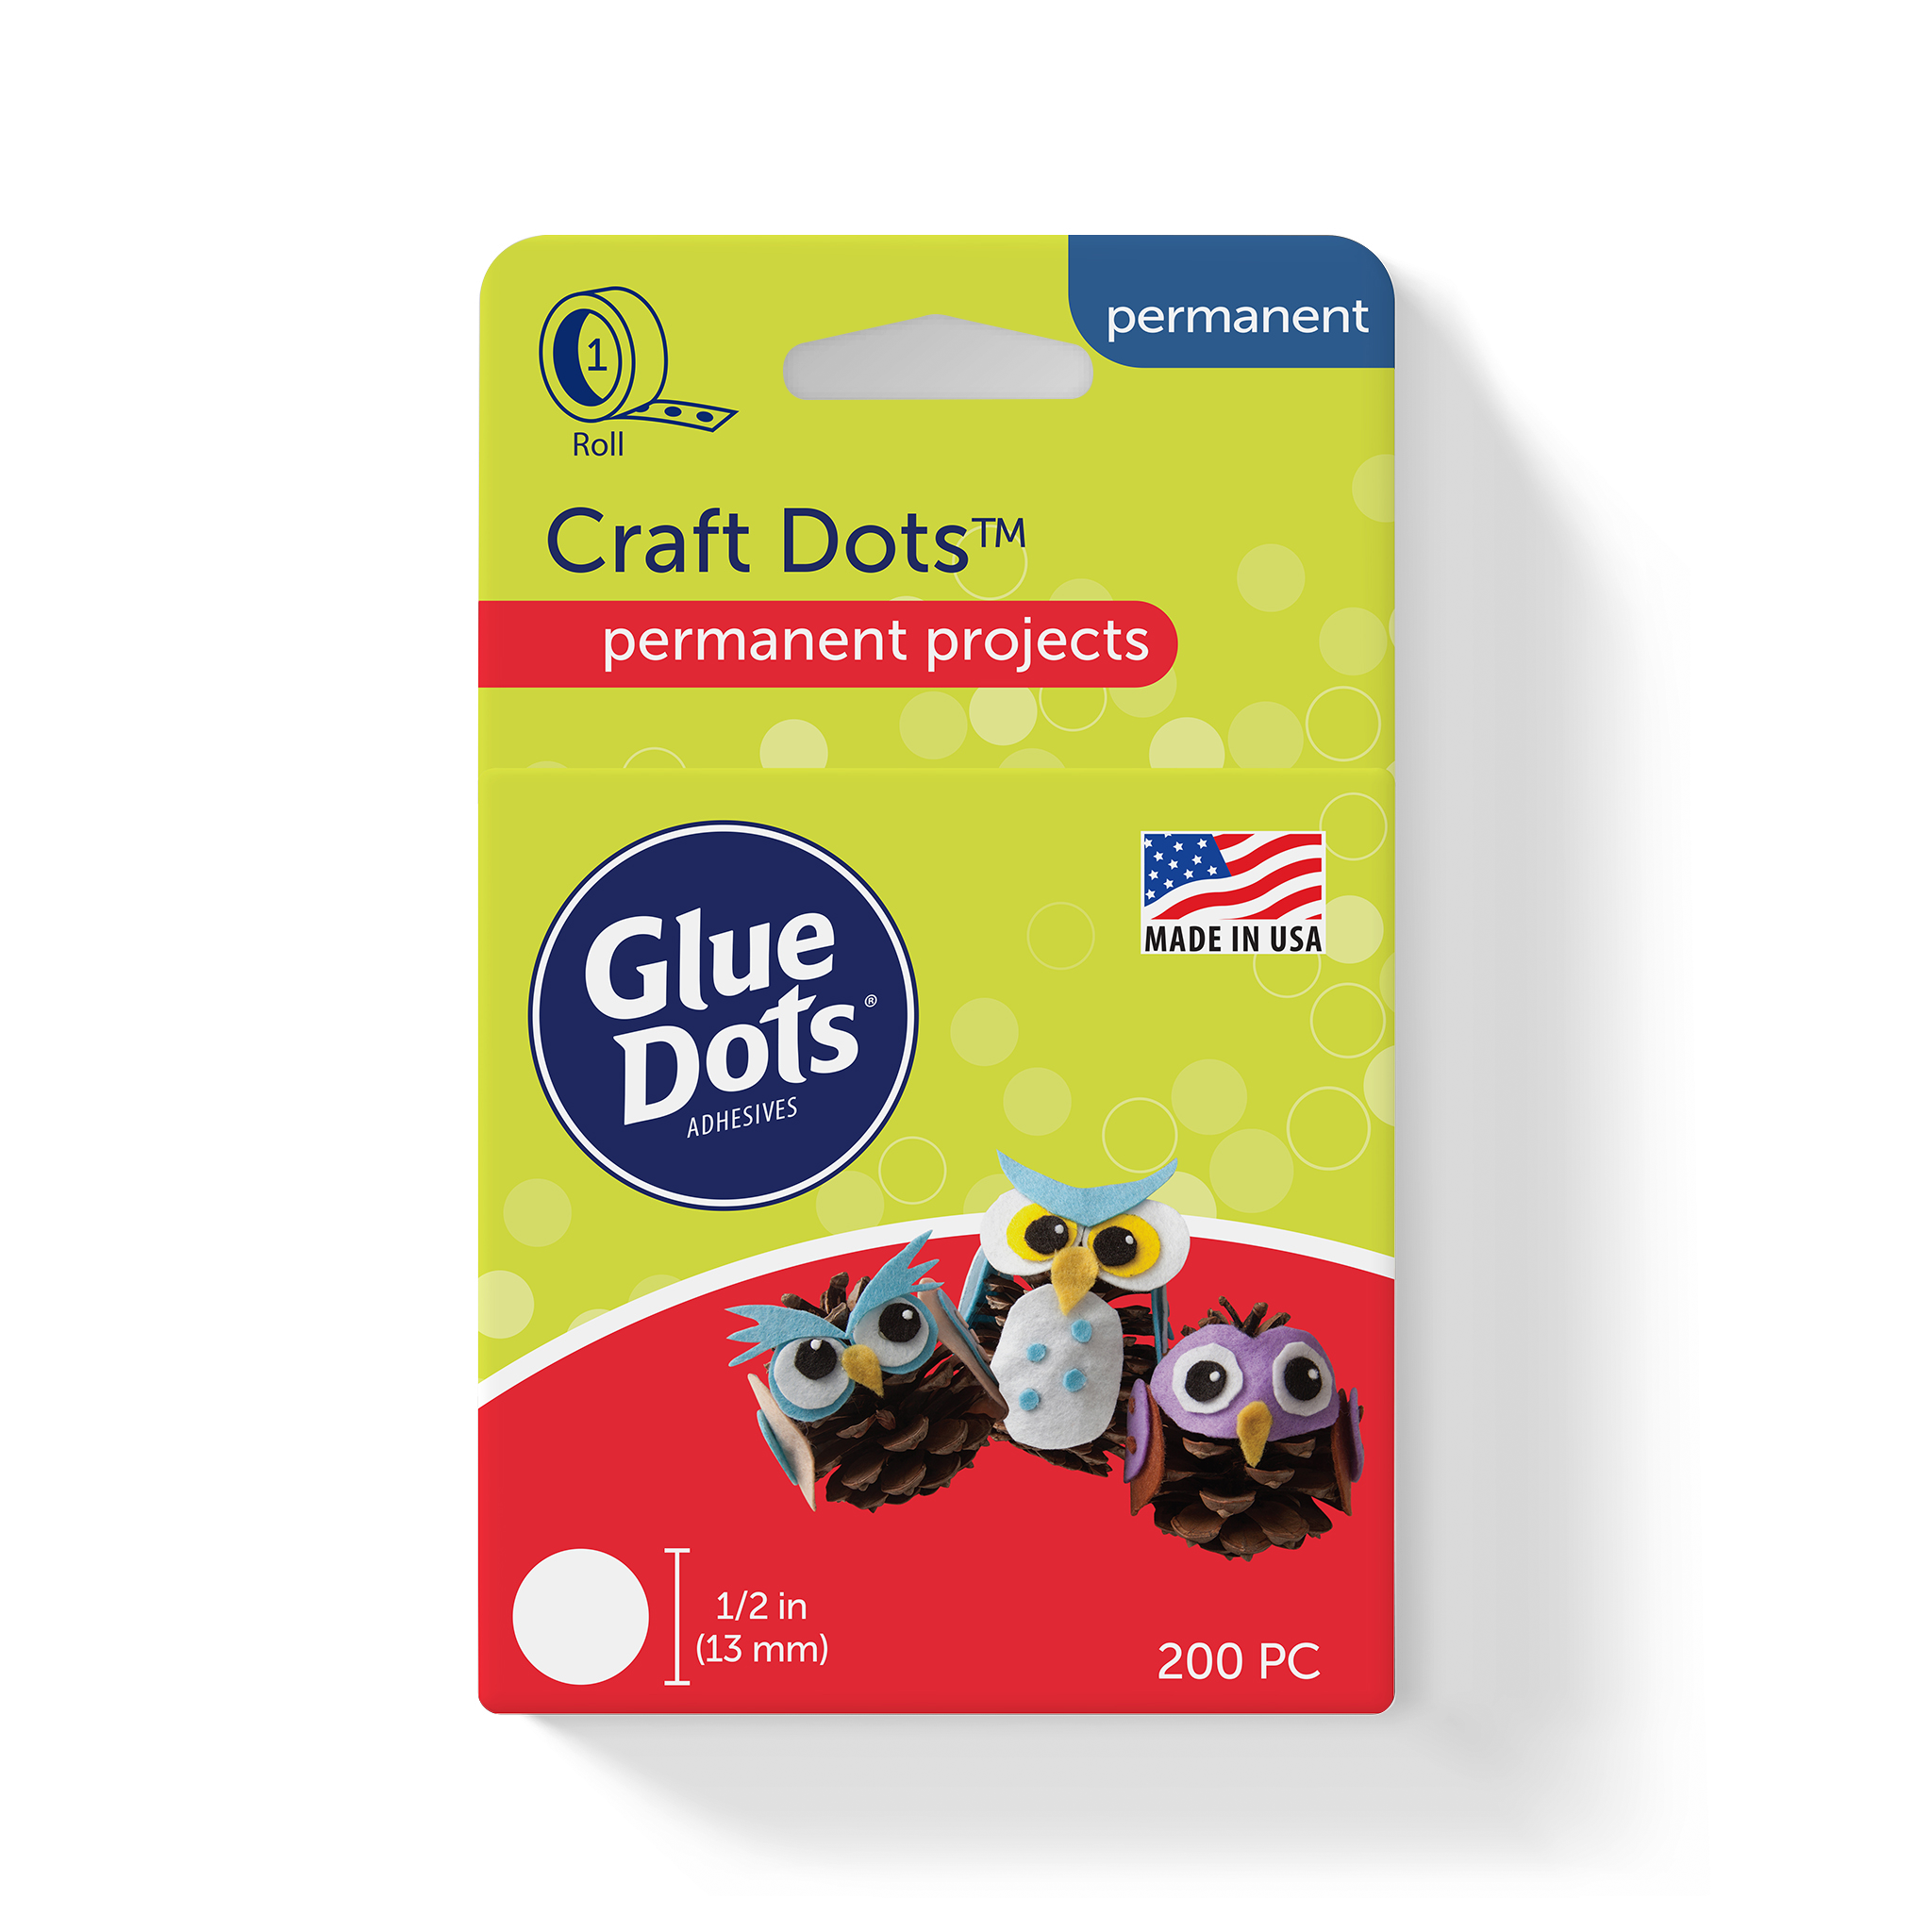 Craft Dots™ Roll – Glue Dots